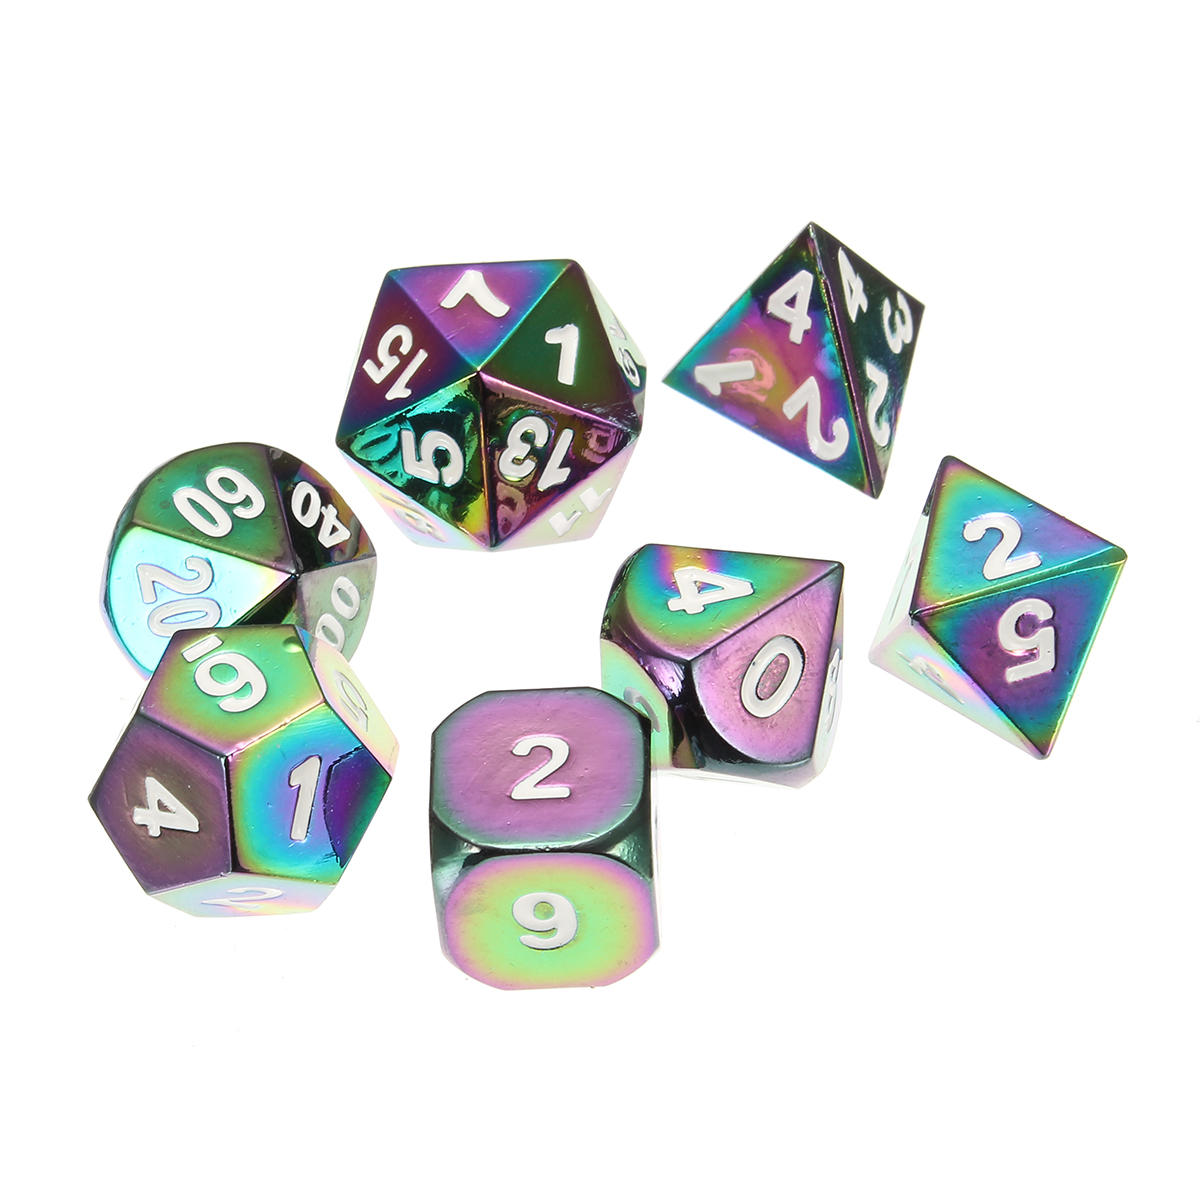 7 stuks colorful zinklegering polyhedral dice set bordspel multisided dobbelstenen gadget: